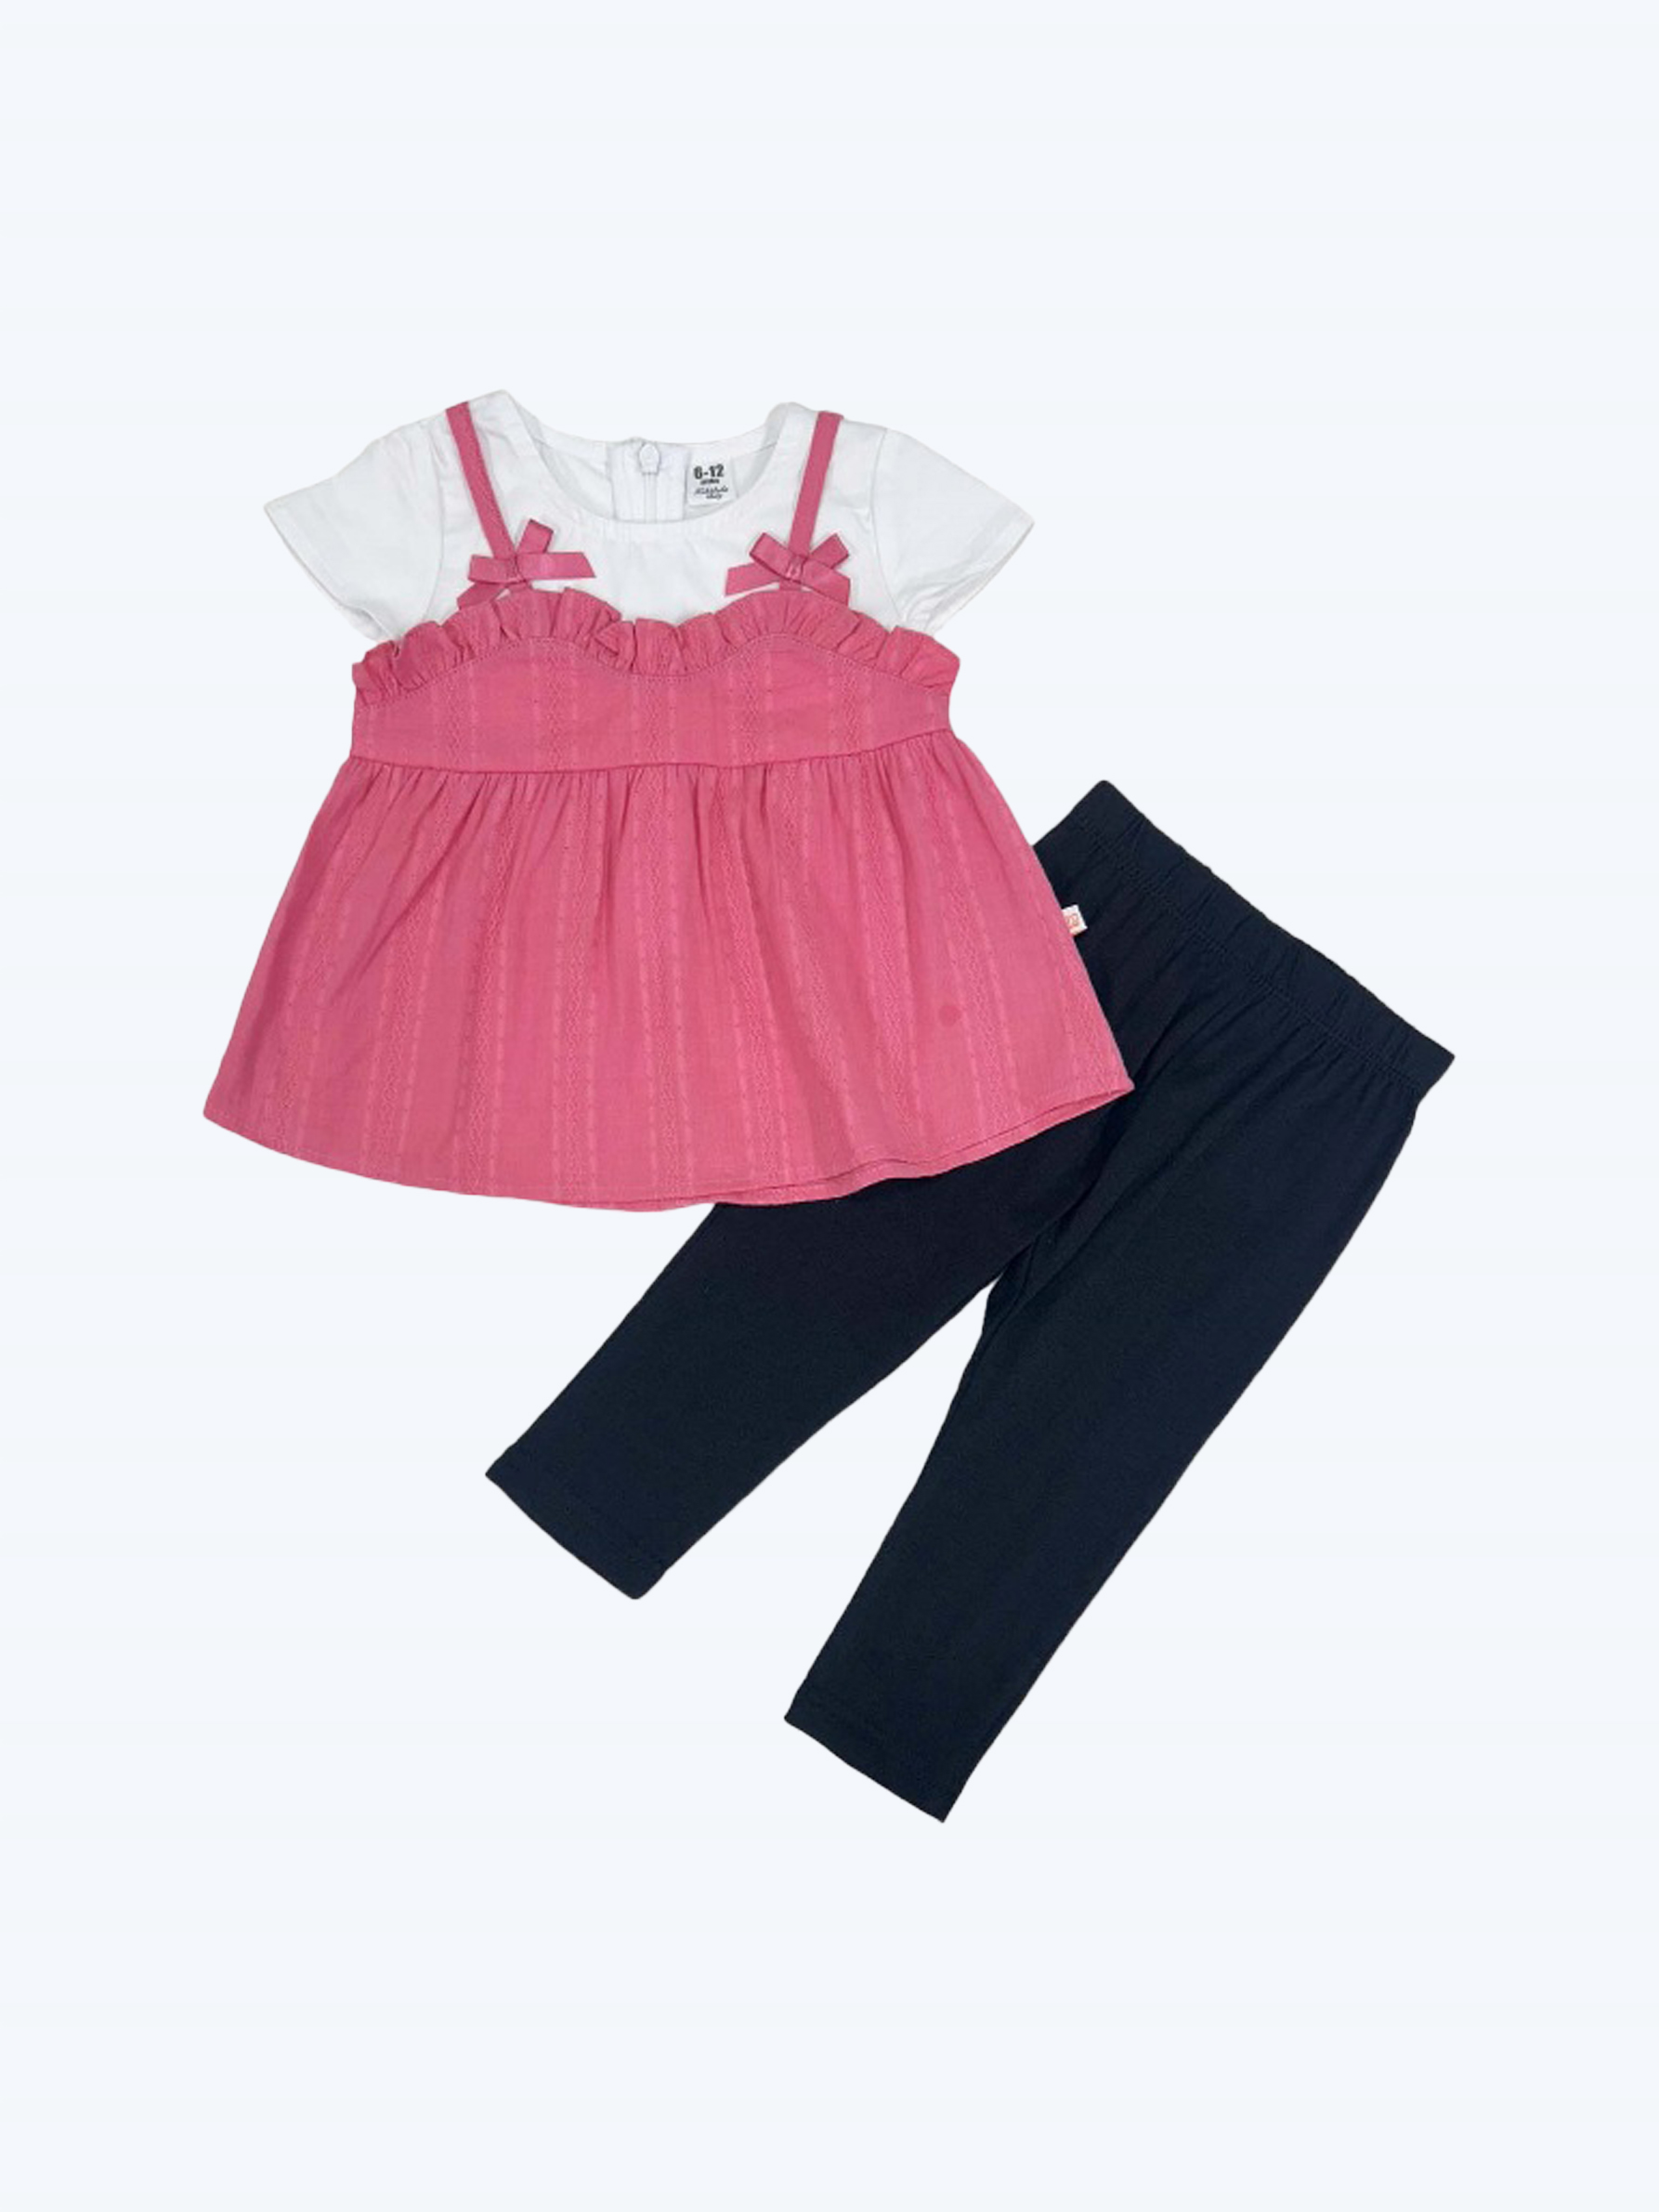 Kiklala Baby Fashion Girl Suit Set GSB339-KIKILALA